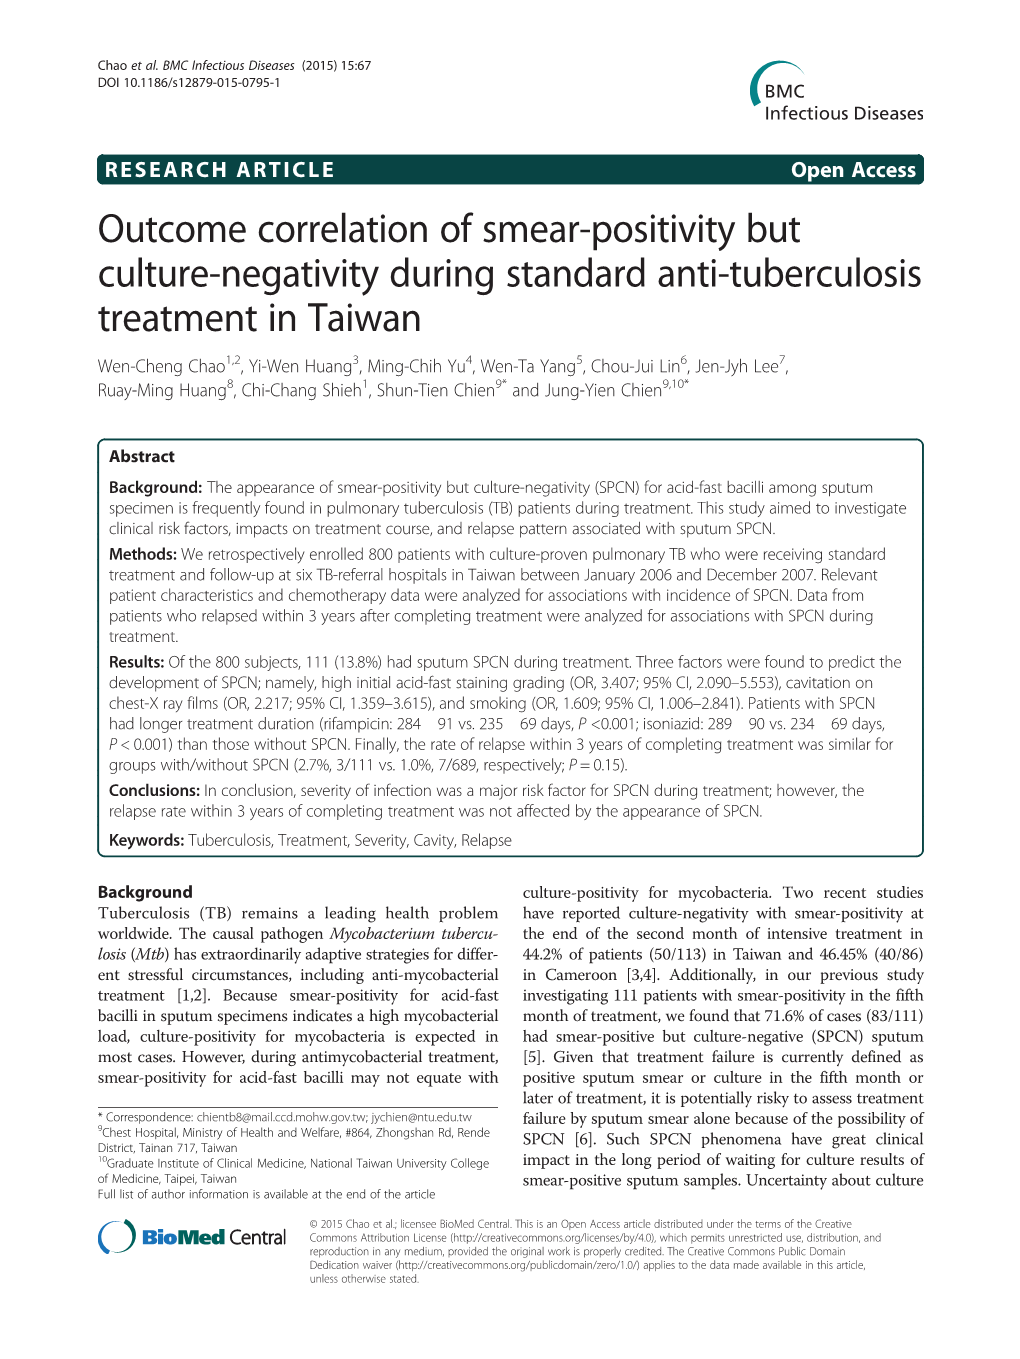 Outcome Correlation of Smear-Positivity but Culture